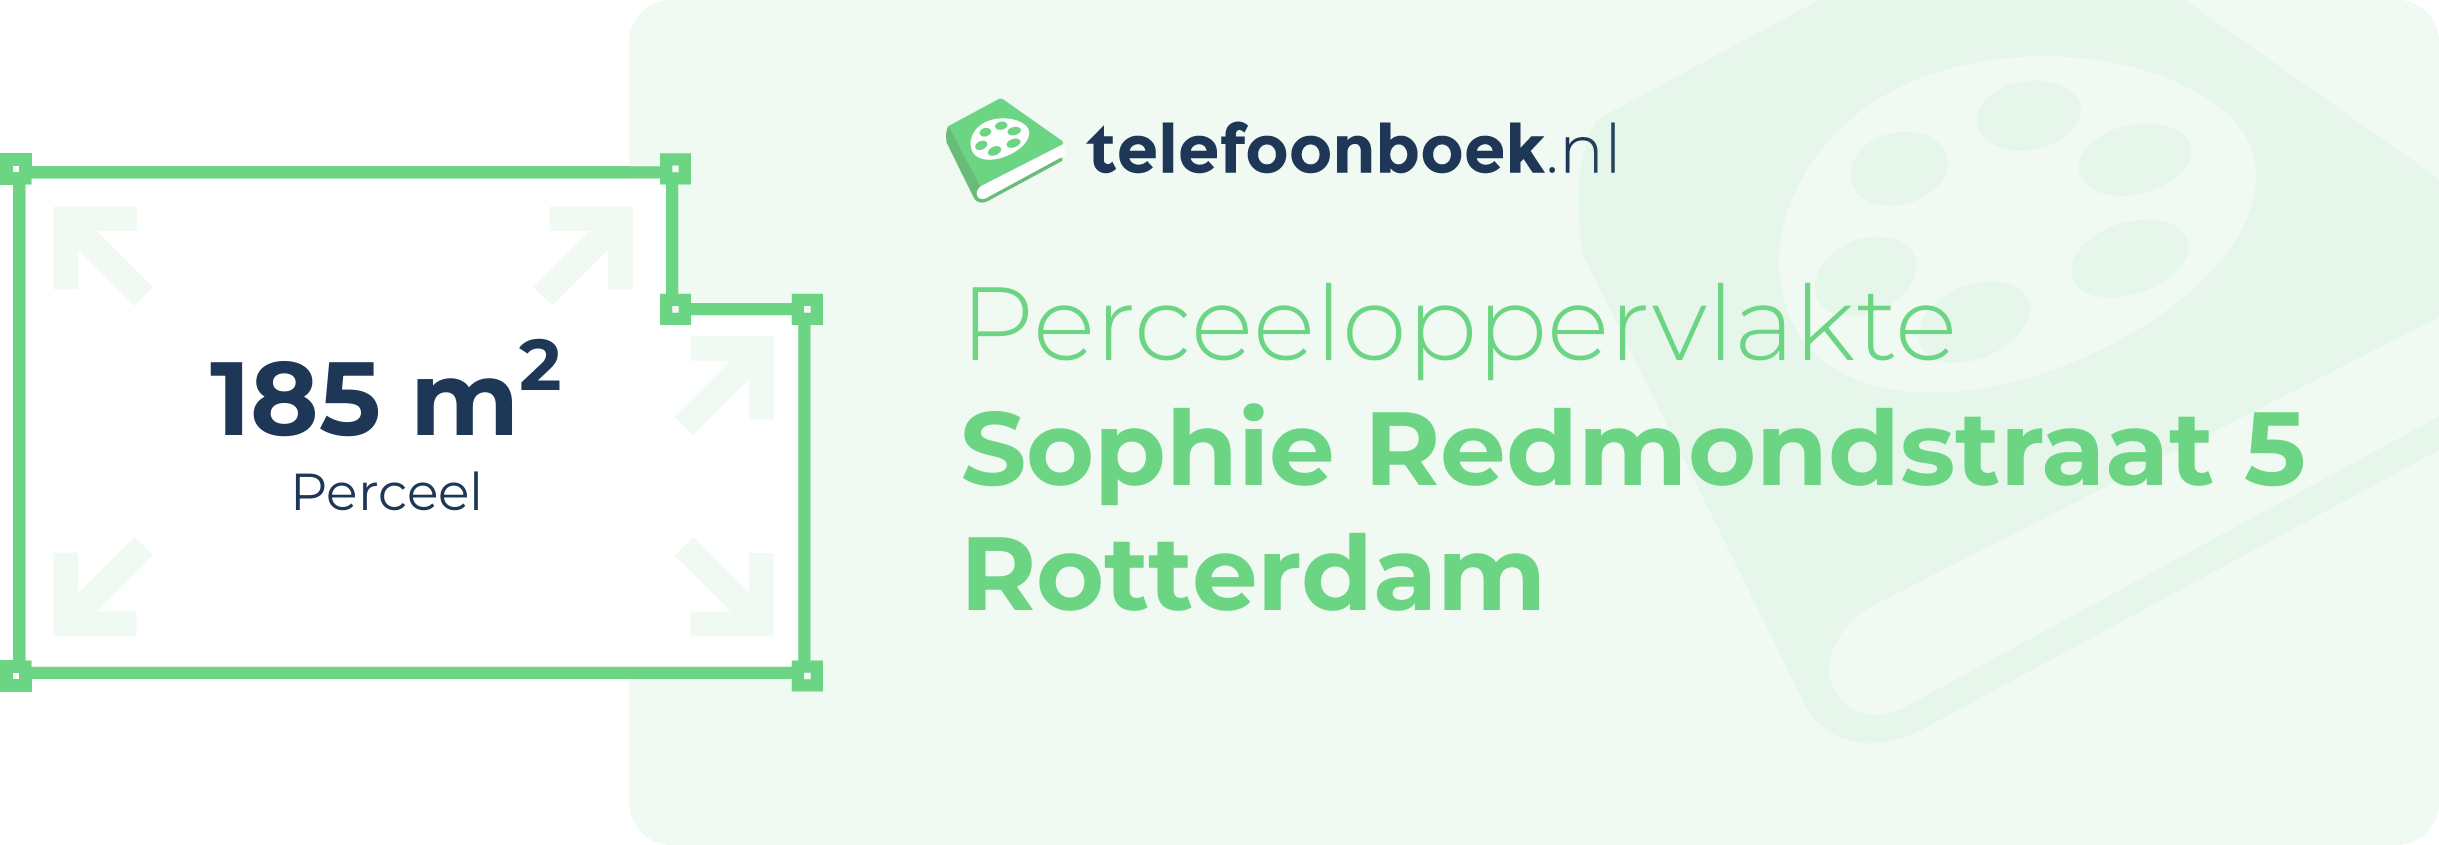 Perceeloppervlakte Sophie Redmondstraat 5 Rotterdam